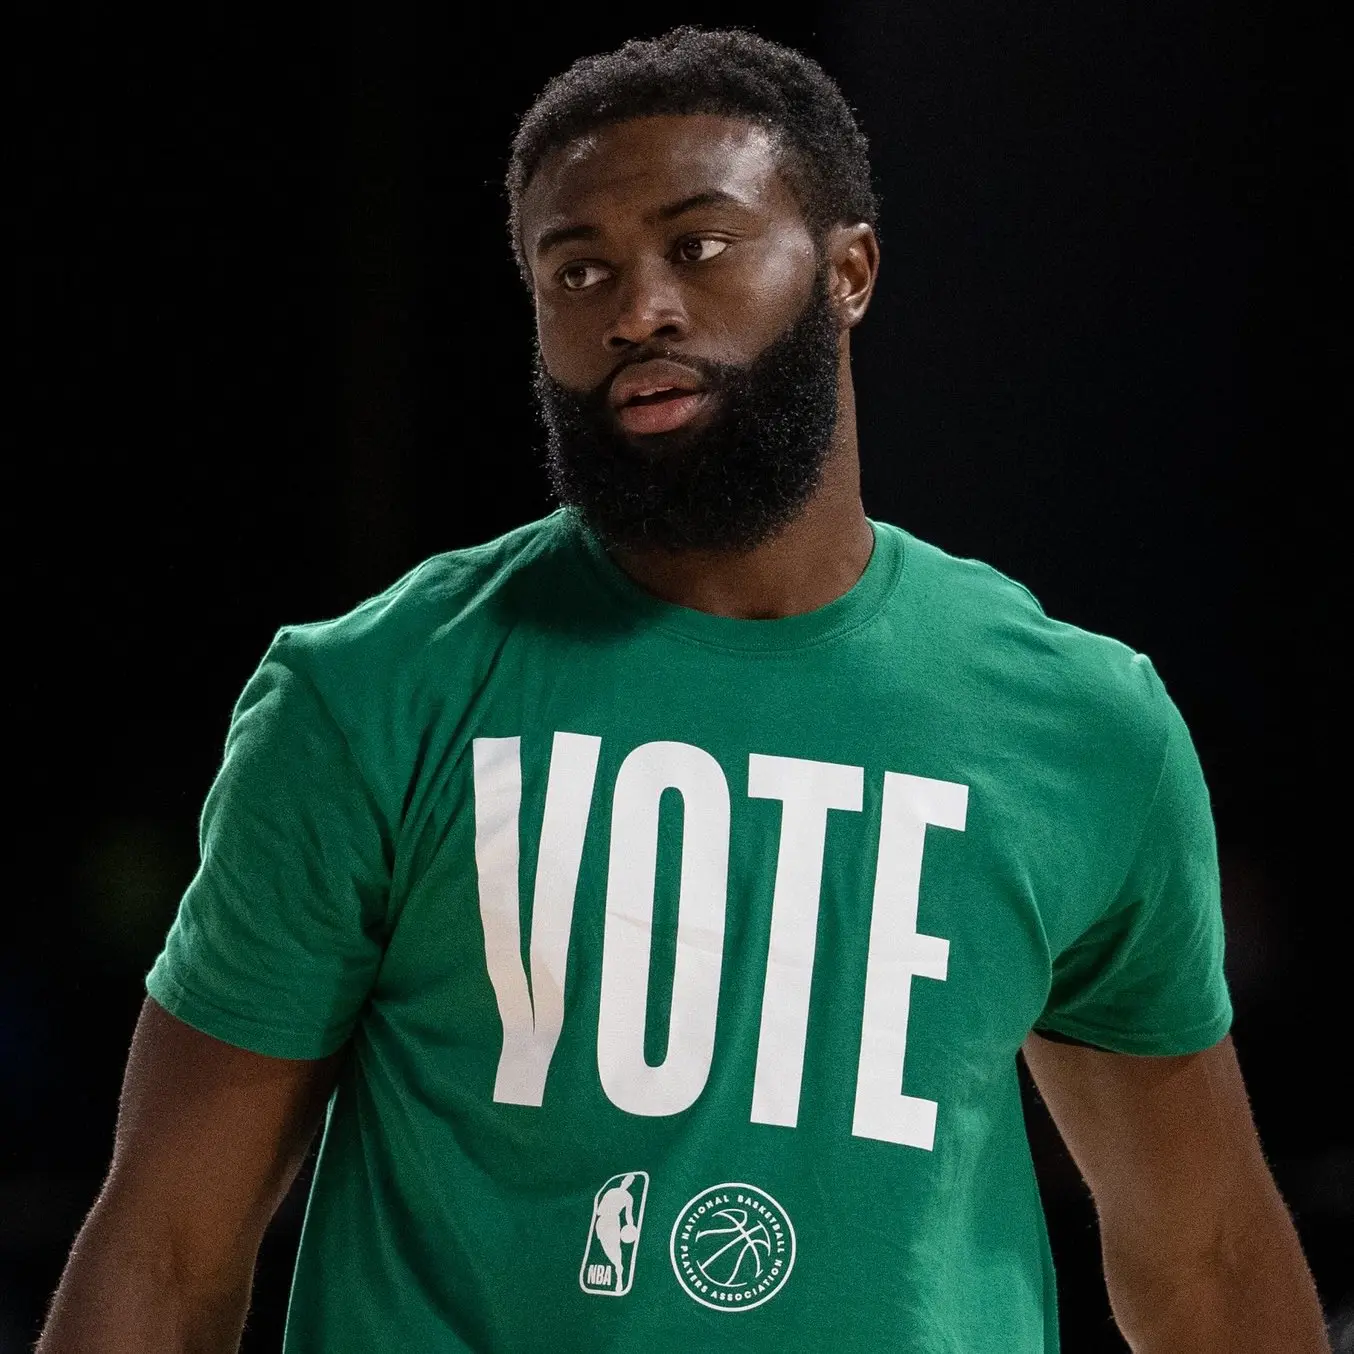 Jaylen Brown com nova camisa "VOTE" liberada pela NBA